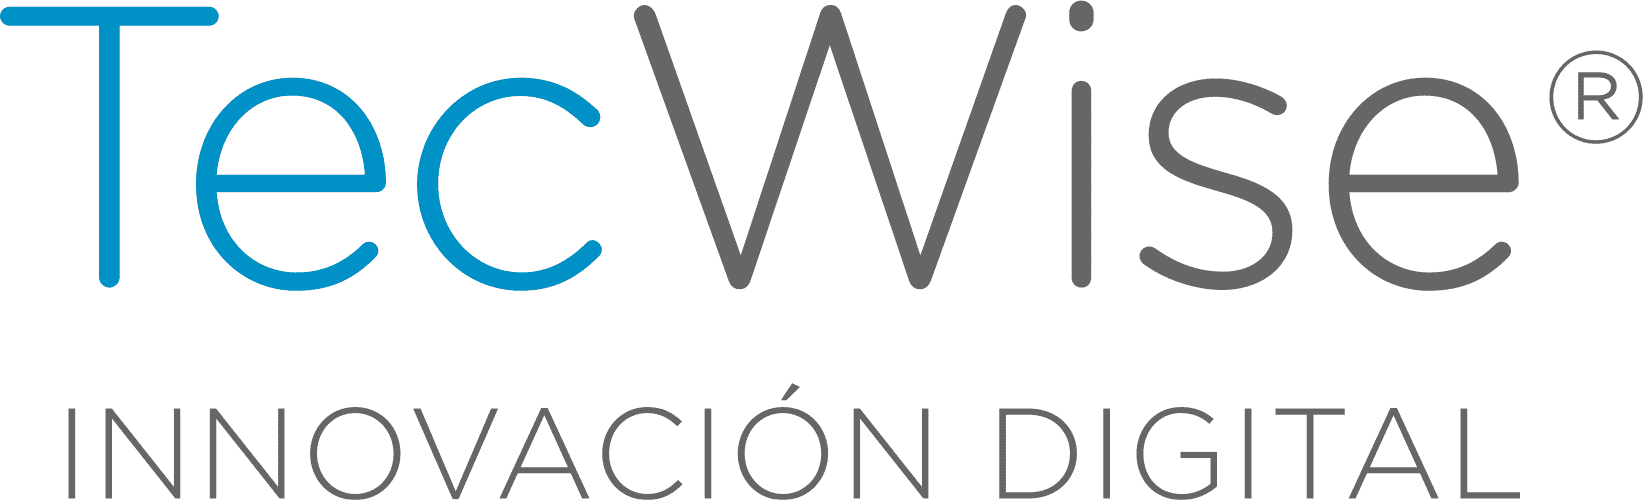 Tecwise Innovacion Digital Chile Logo